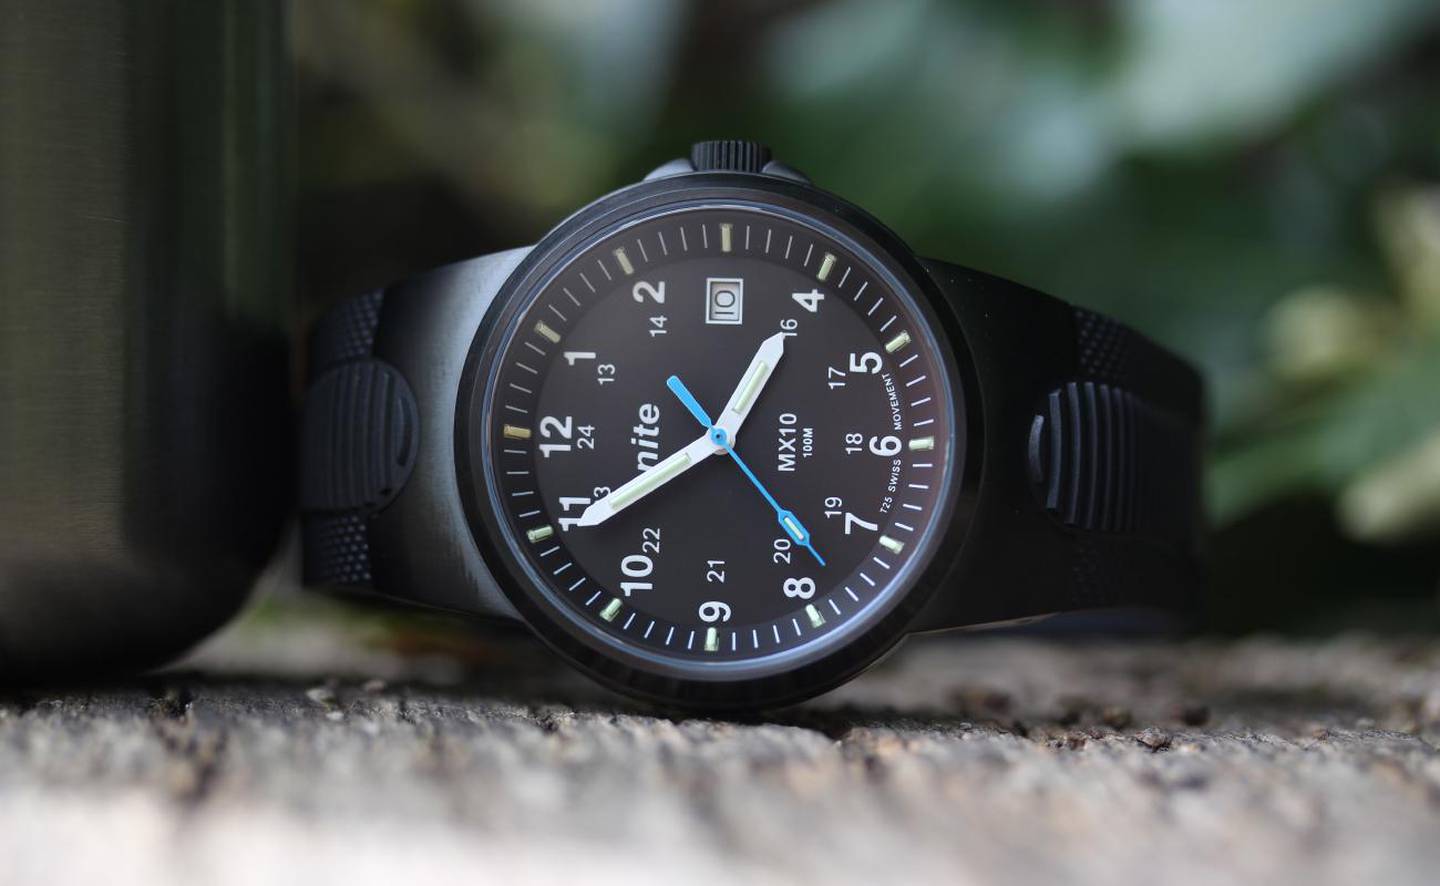 The Nite MX10-201 timepiece was originally worn by SAS soldiers. Courtesy Nite 